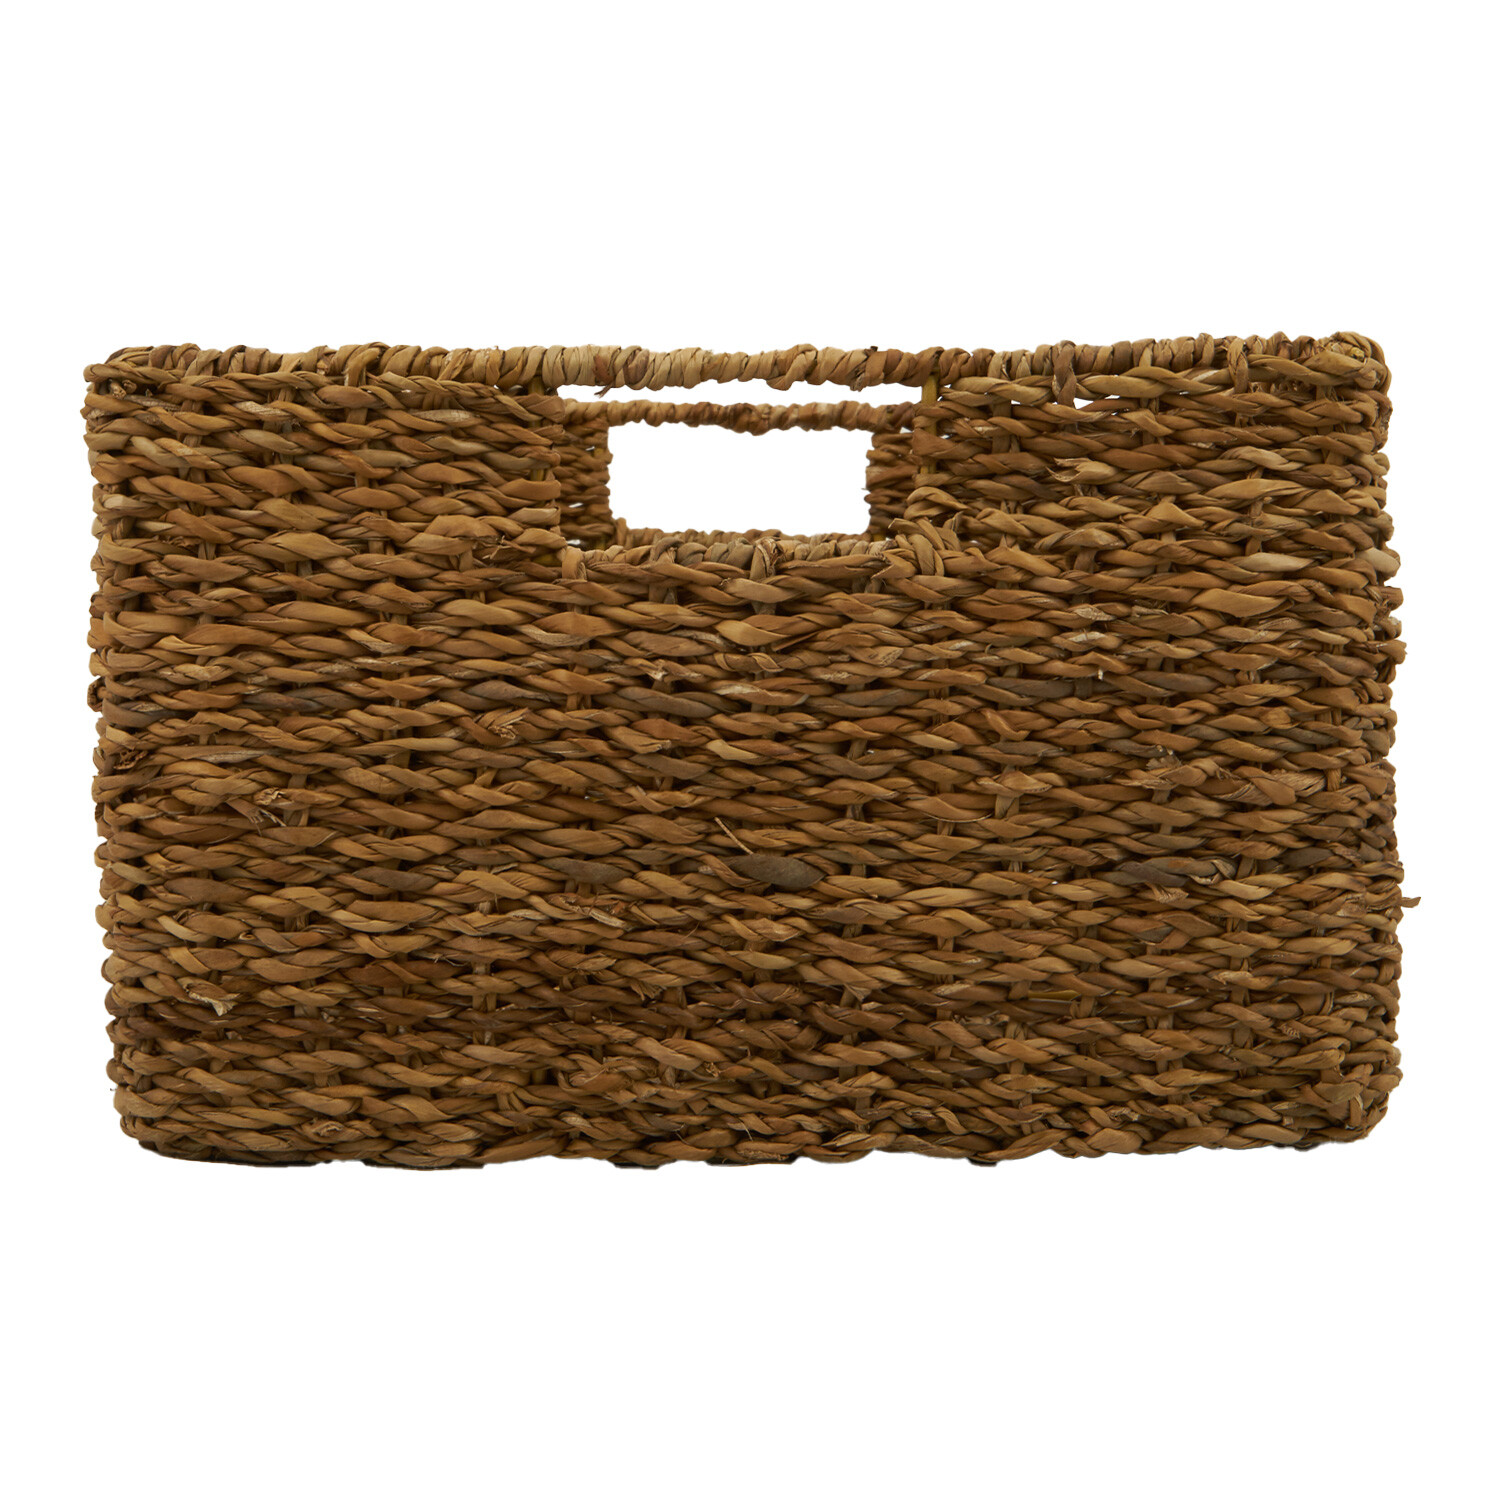 Set of 2 Sea Grass Storage Baskets - Brown Image 5